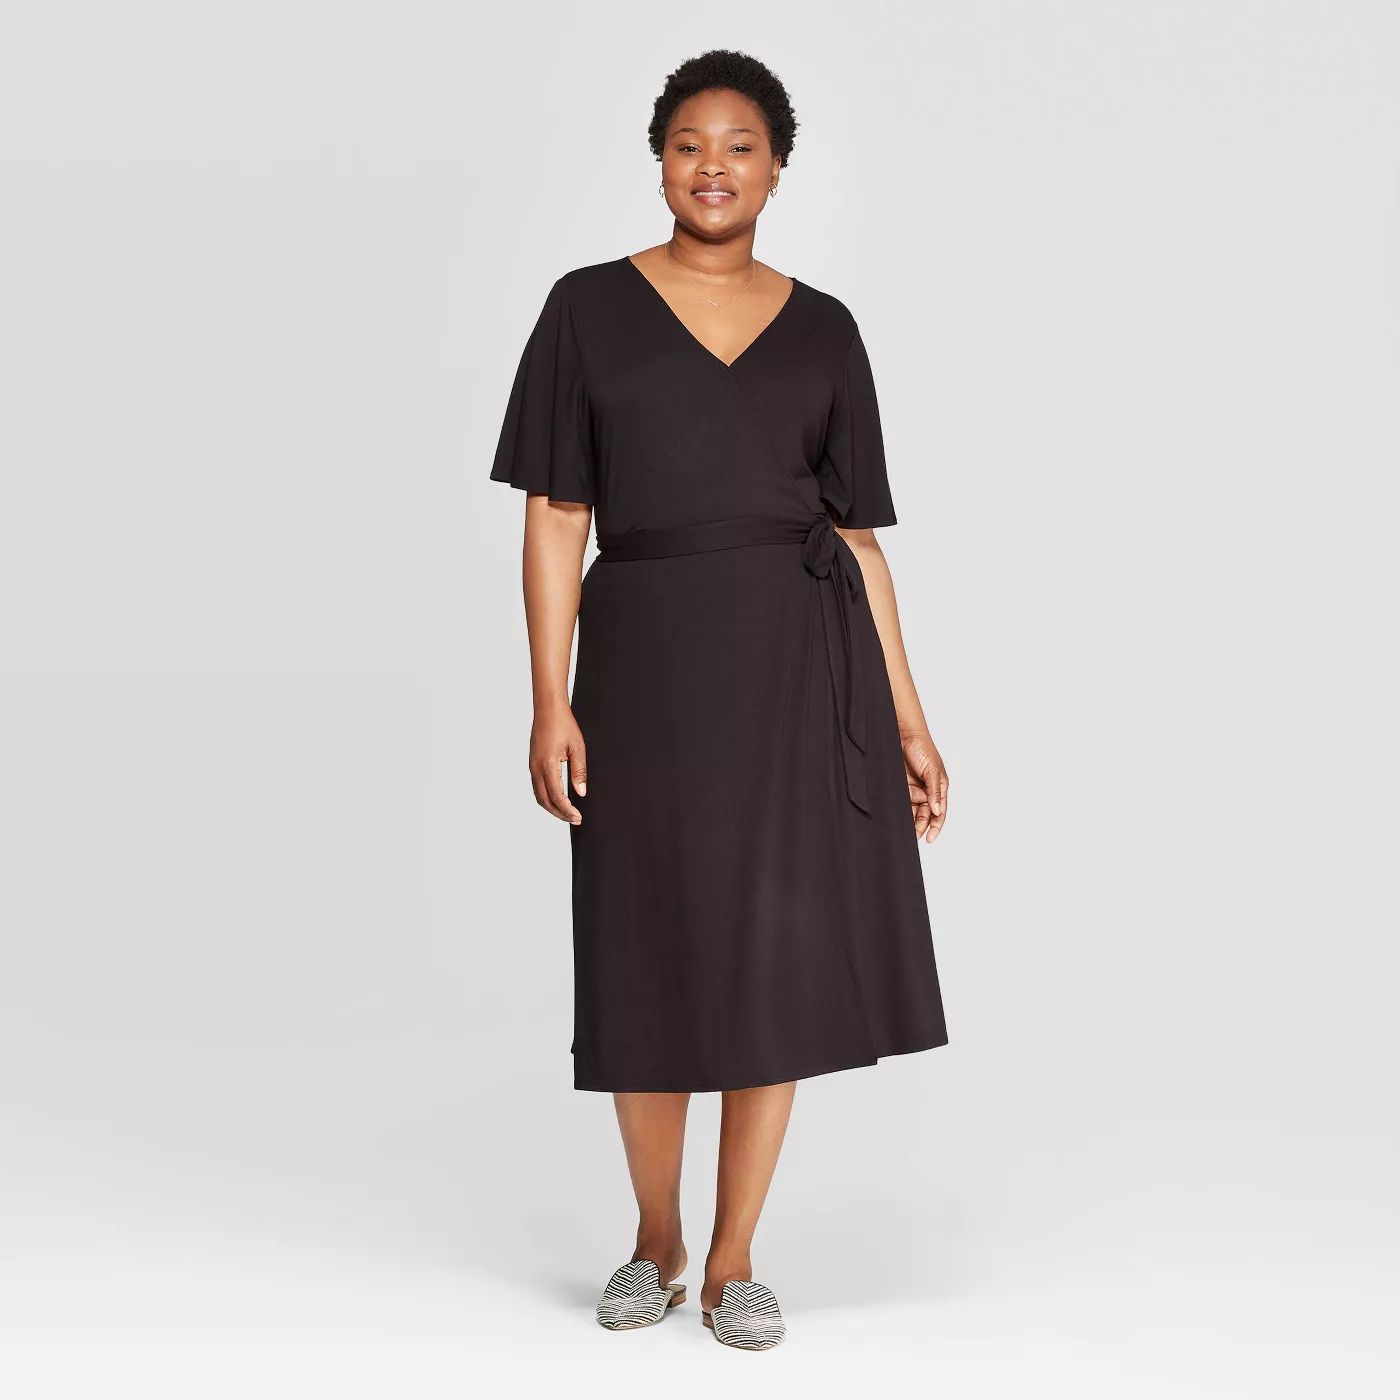 Women's Plus Size Short Sleeve V-Neck Knit Wrap A-Line Dress - Ava & Vivâ¢ - image 1 of 3